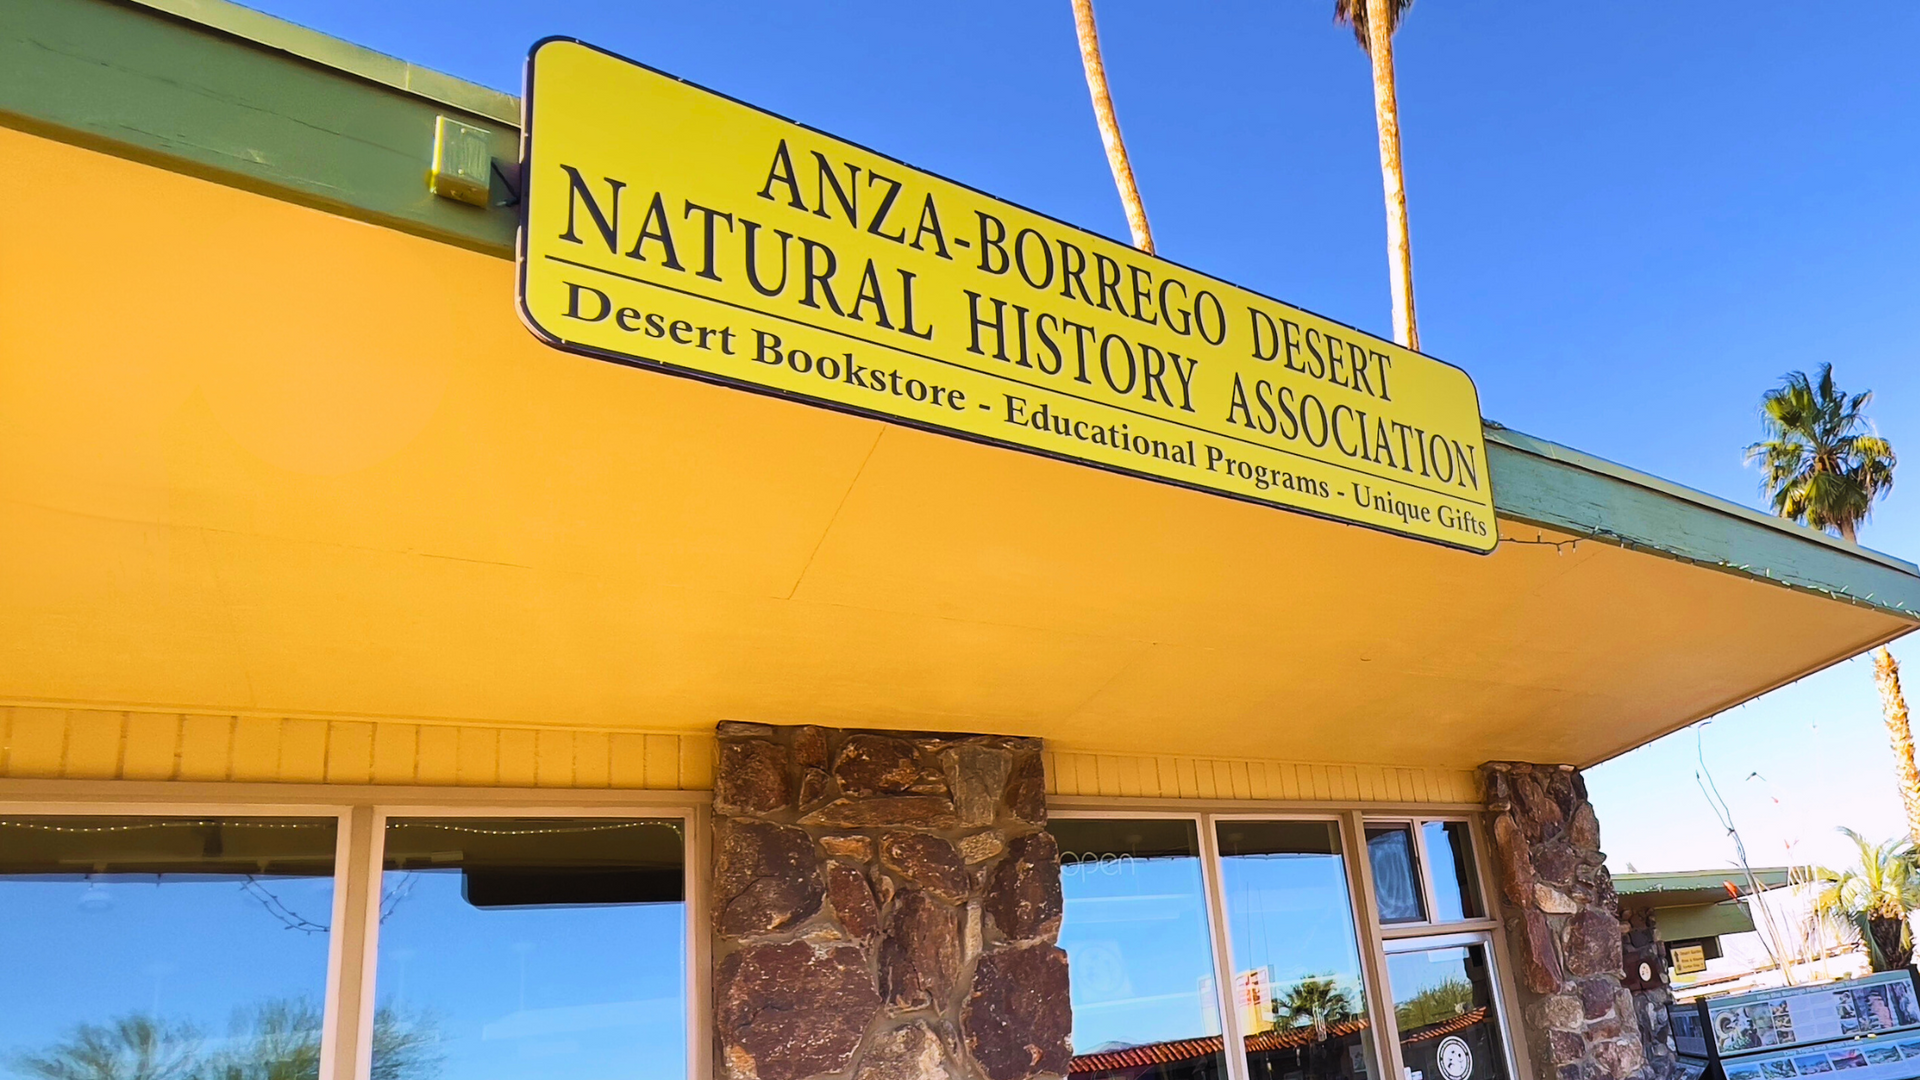 Anza-Borrego Desert Natural History Association